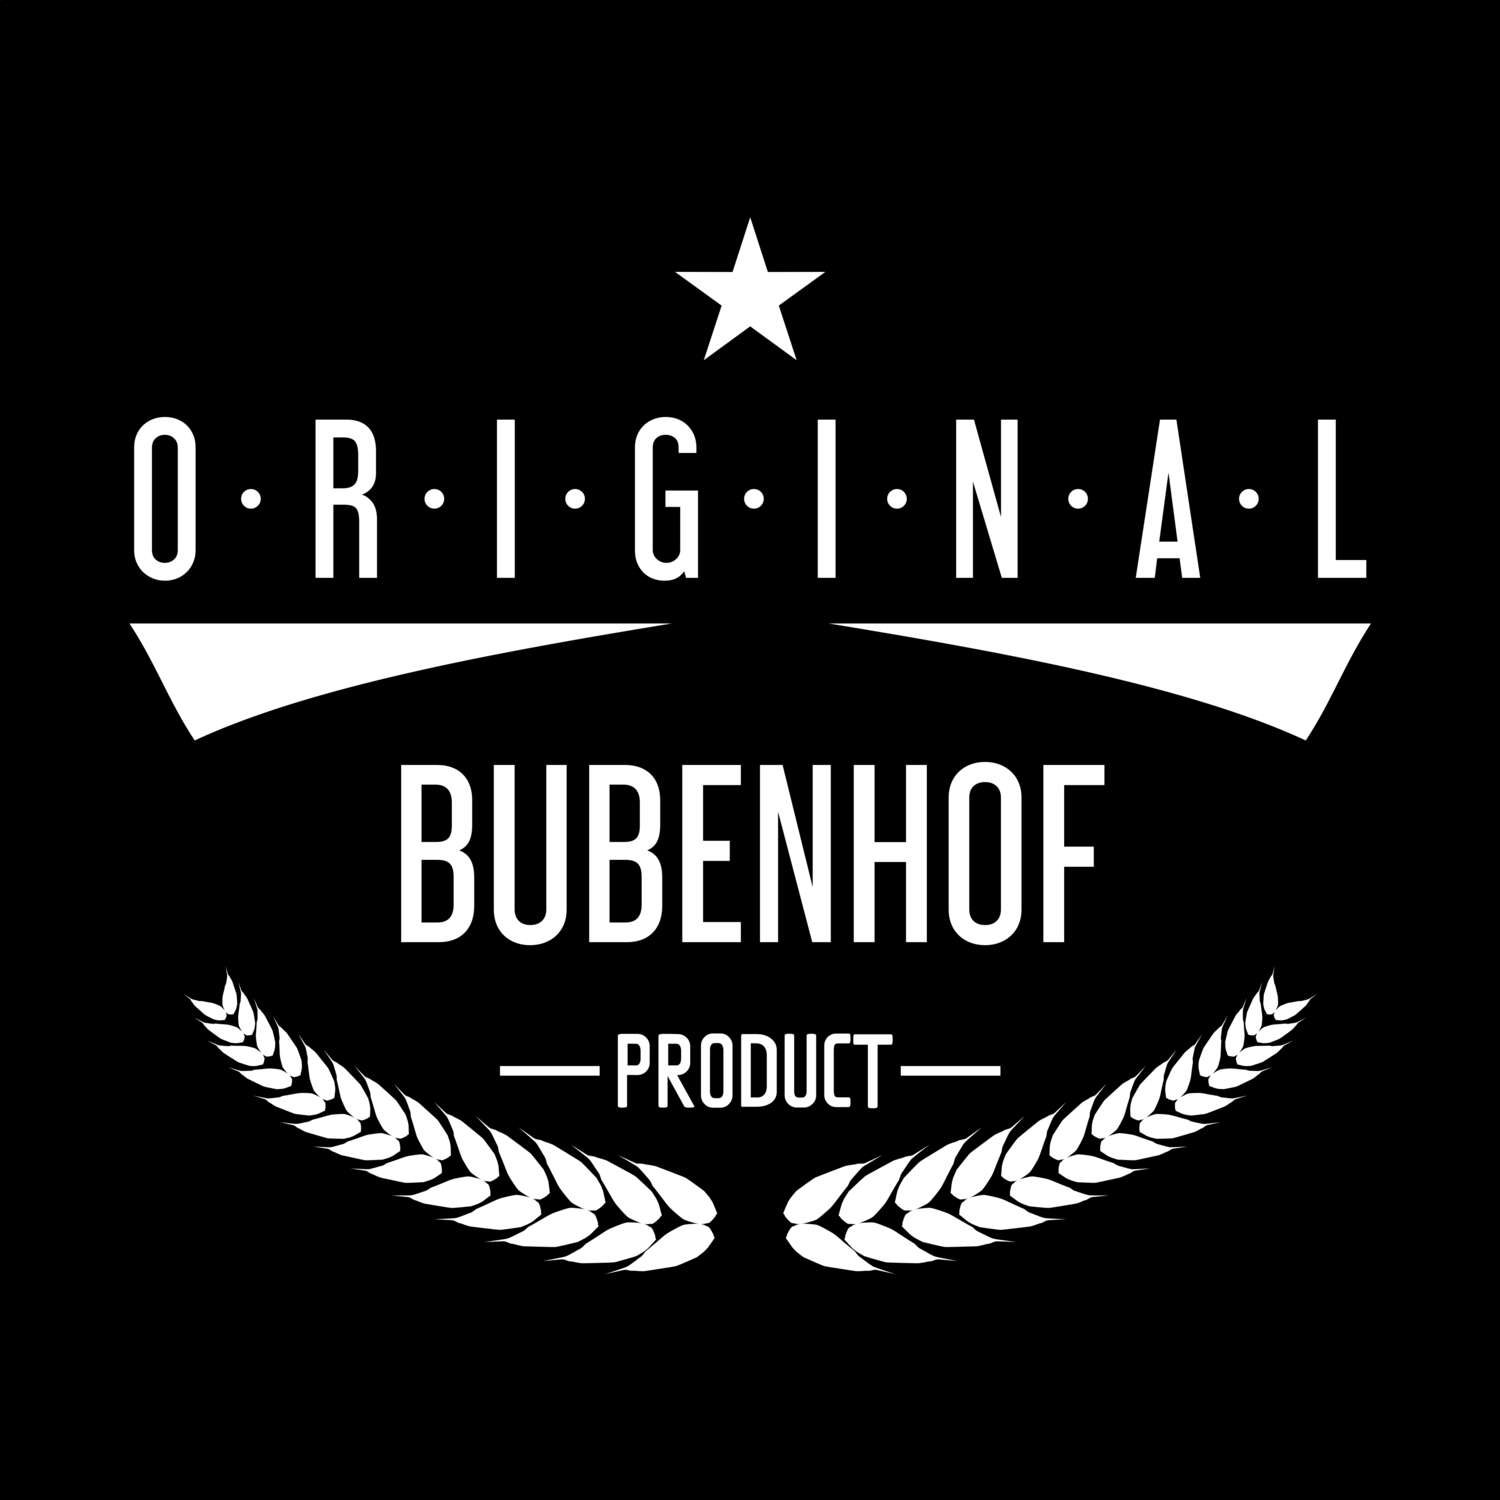 Bubenhof T-Shirt »Original Product«